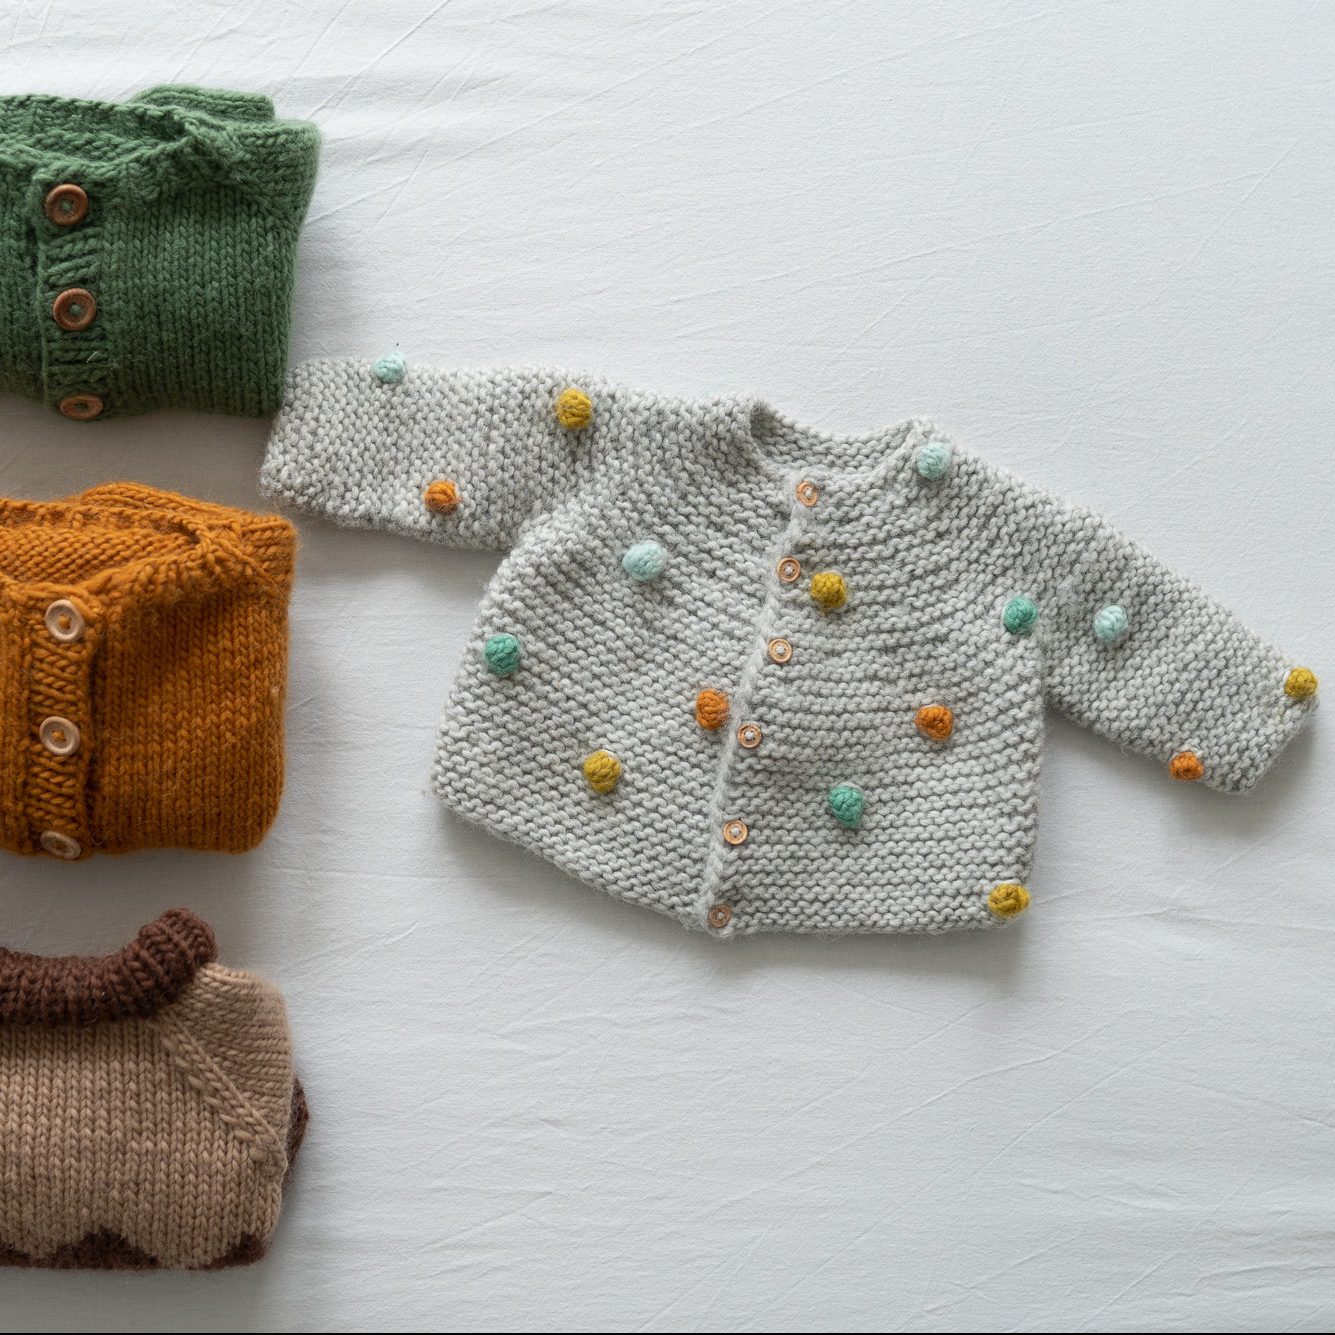  - Popcorn jacket | Knitted jacket baby | Knitting pattern - by HipKnitShop - 12/01/2021